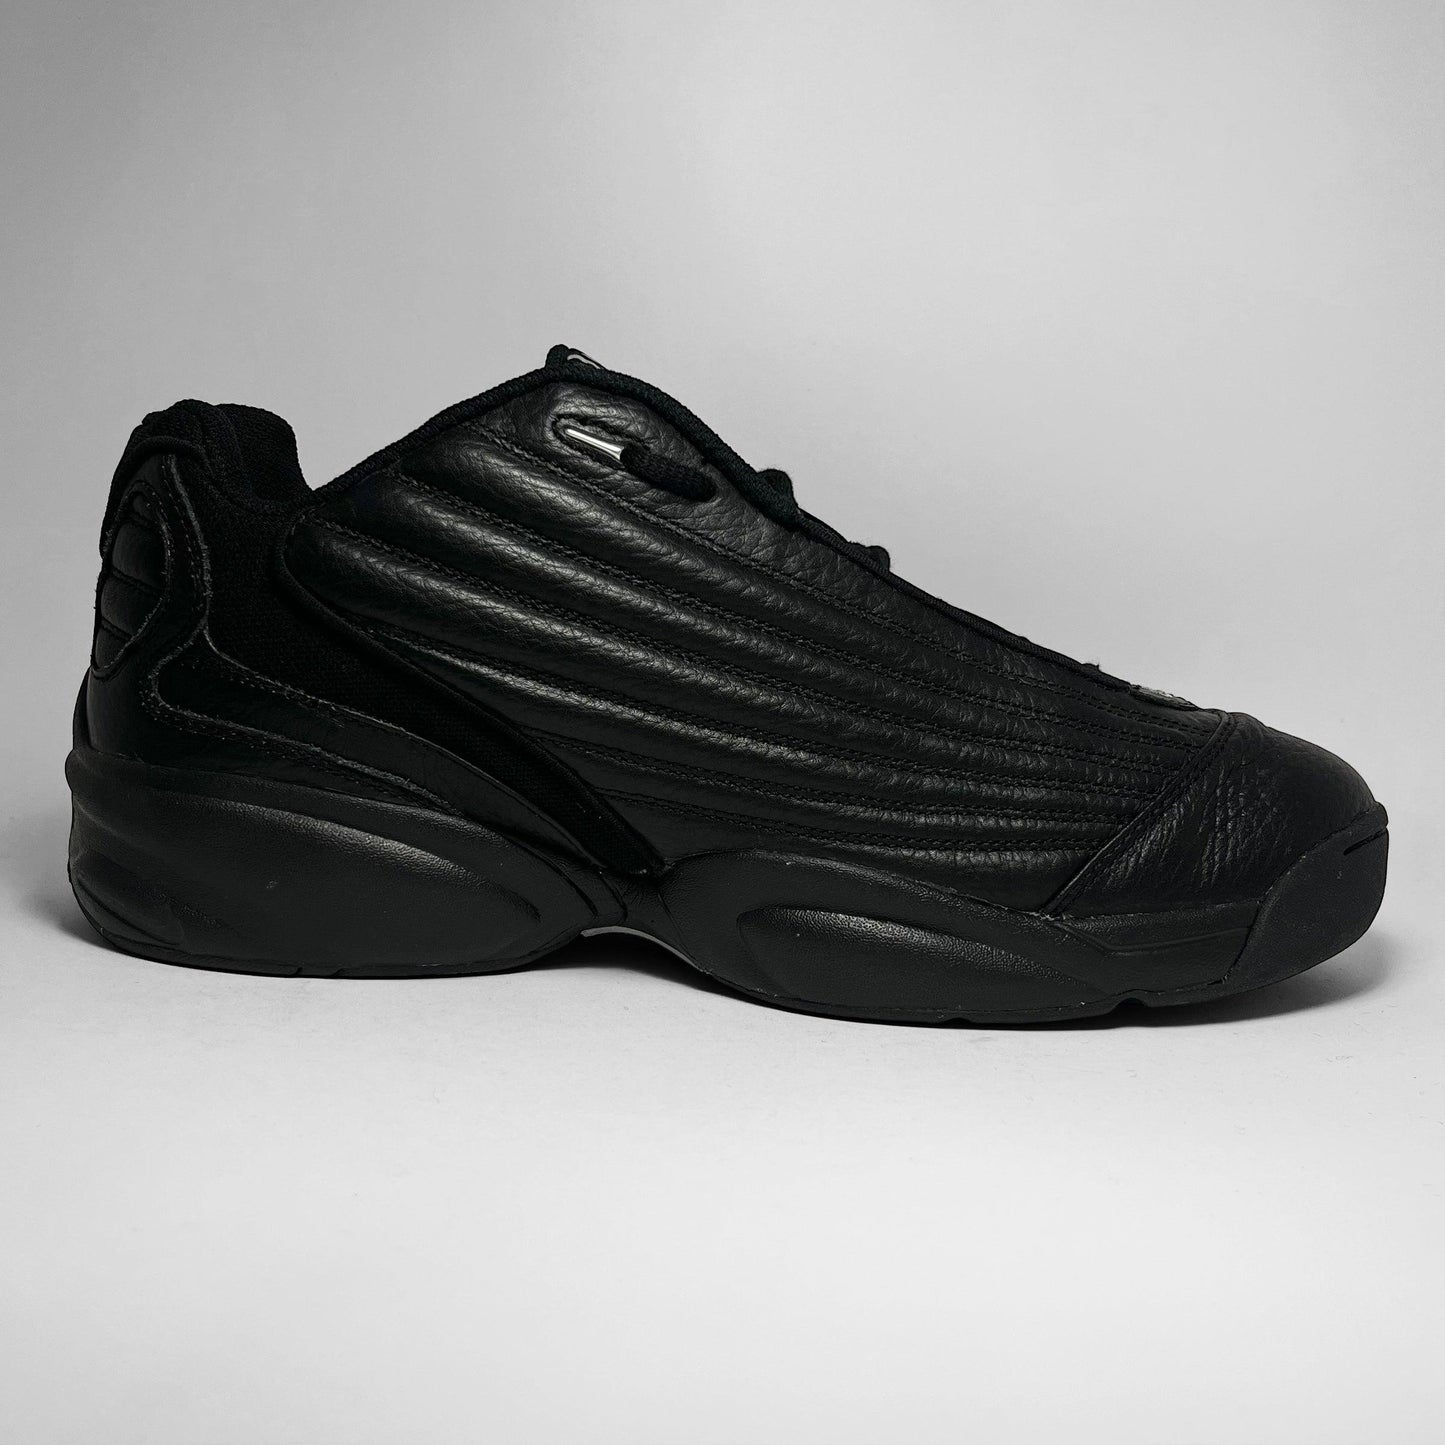 Nike Basketball Dura Comfort (2001) - Known Source